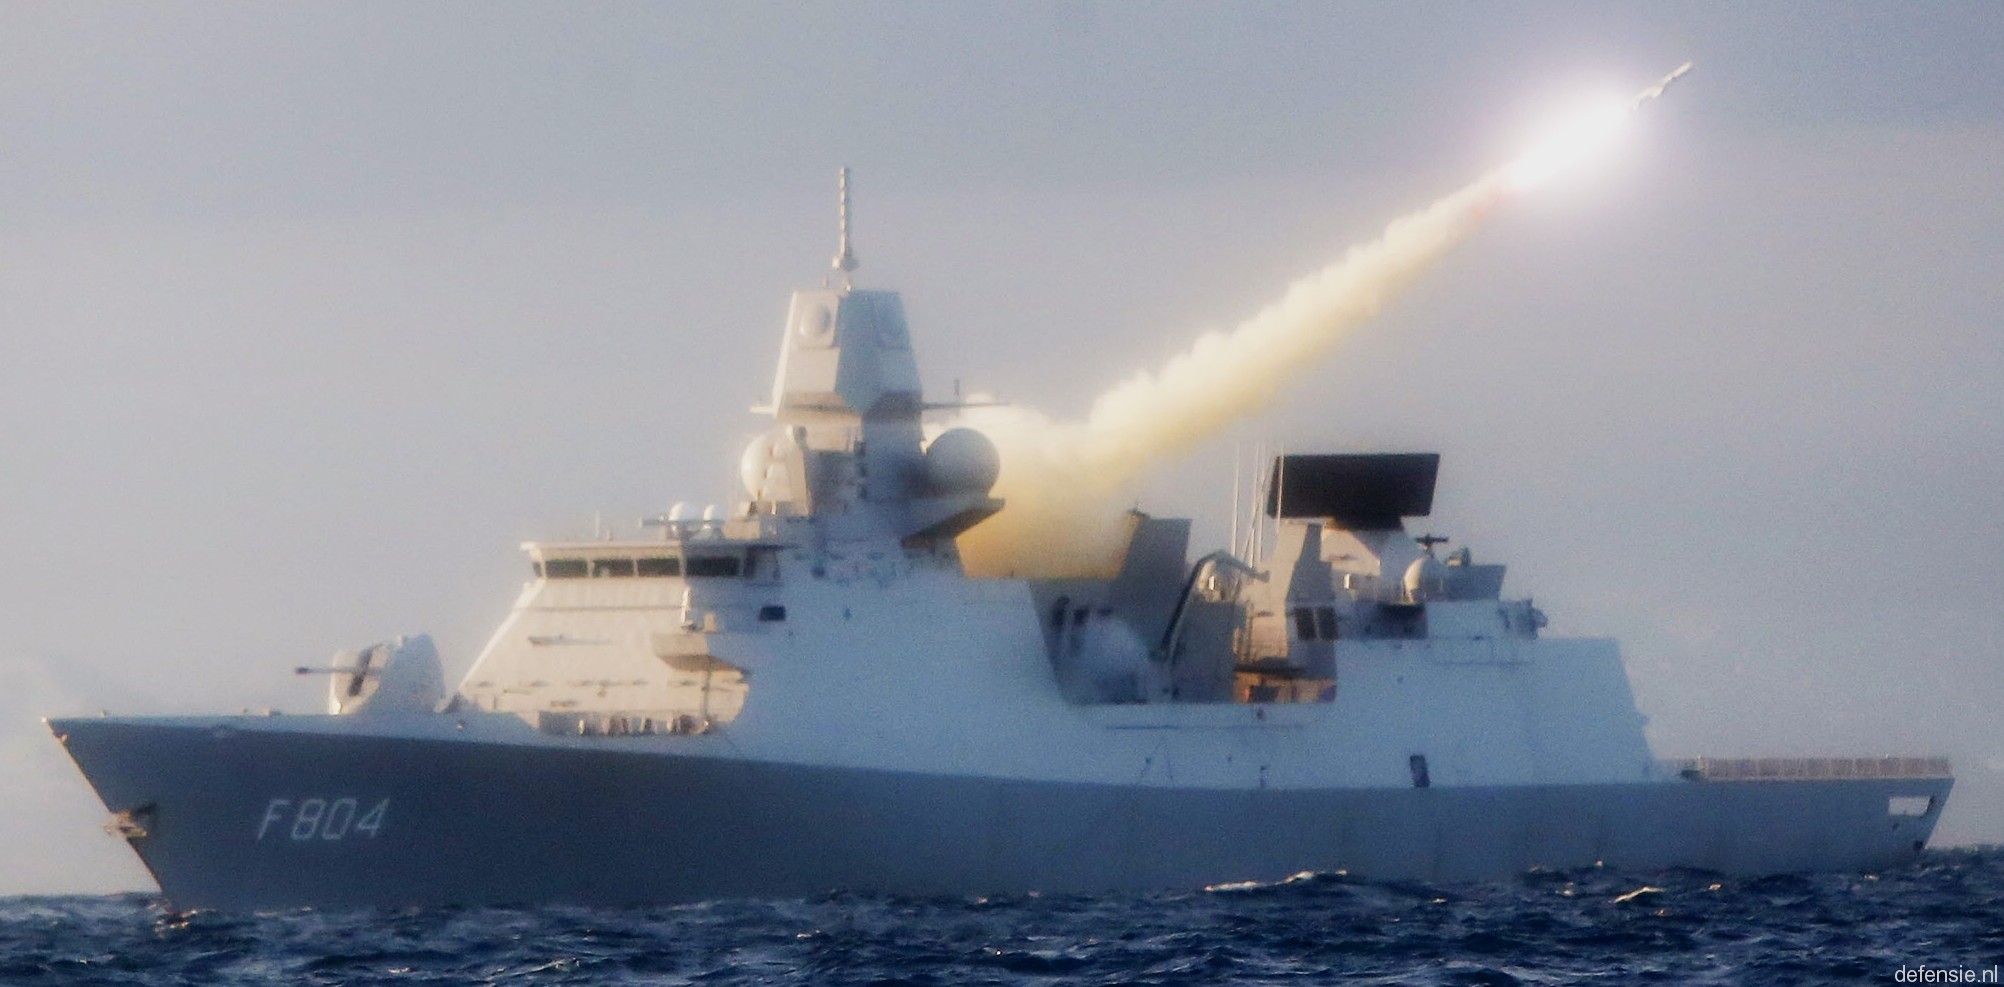 f-804 hnlms de ruyter guided missile frigate ffg lcf royal netherlands navy 30 rgm-84 harpoon ssm